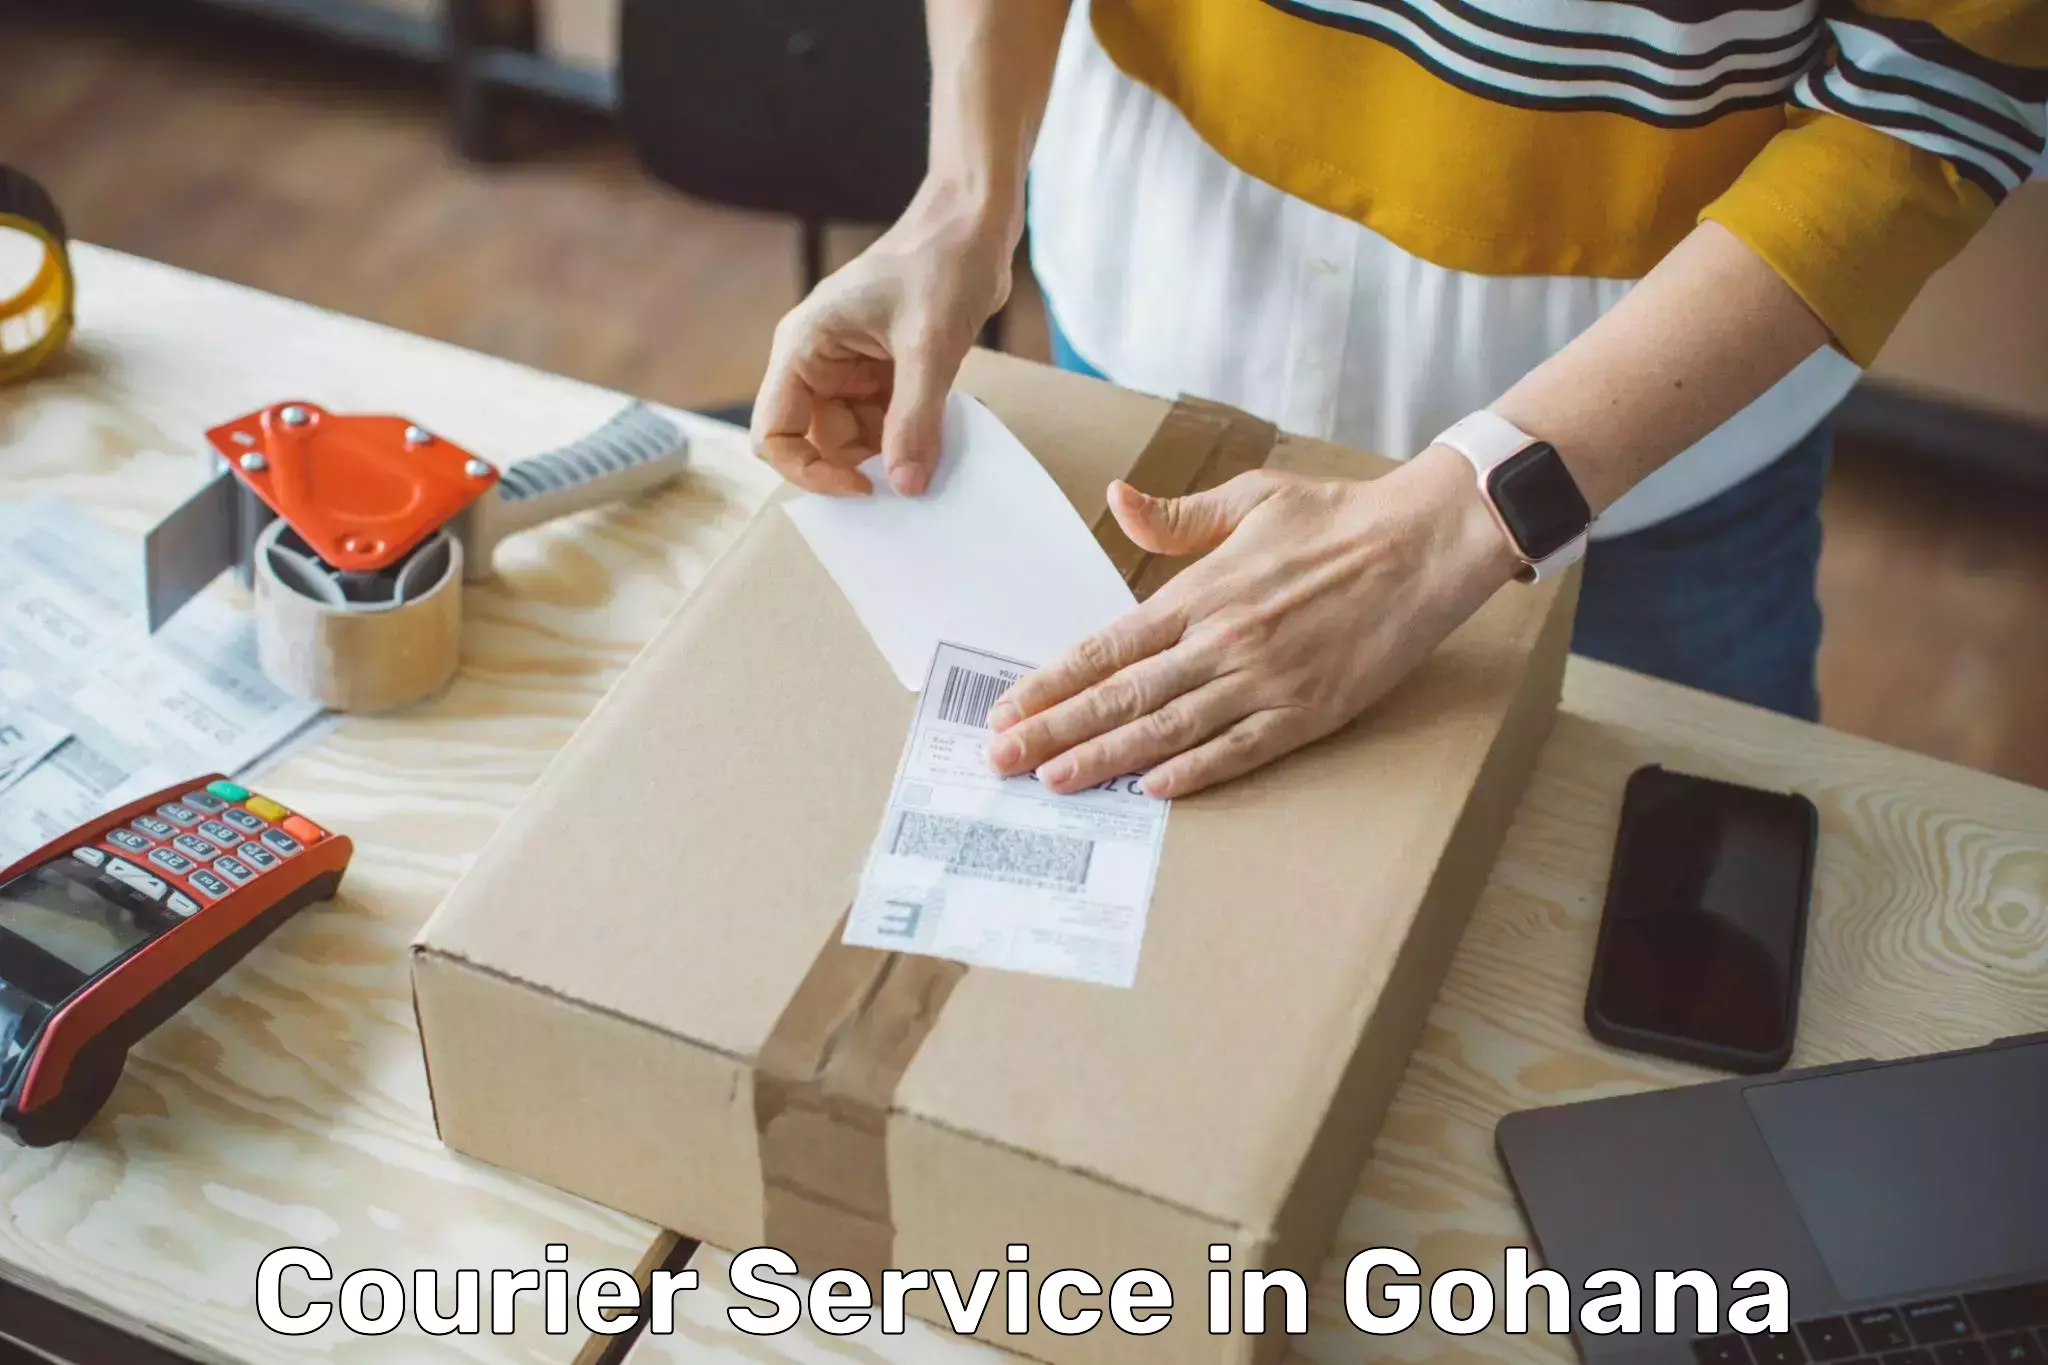 Efficient logistics management in Gohana